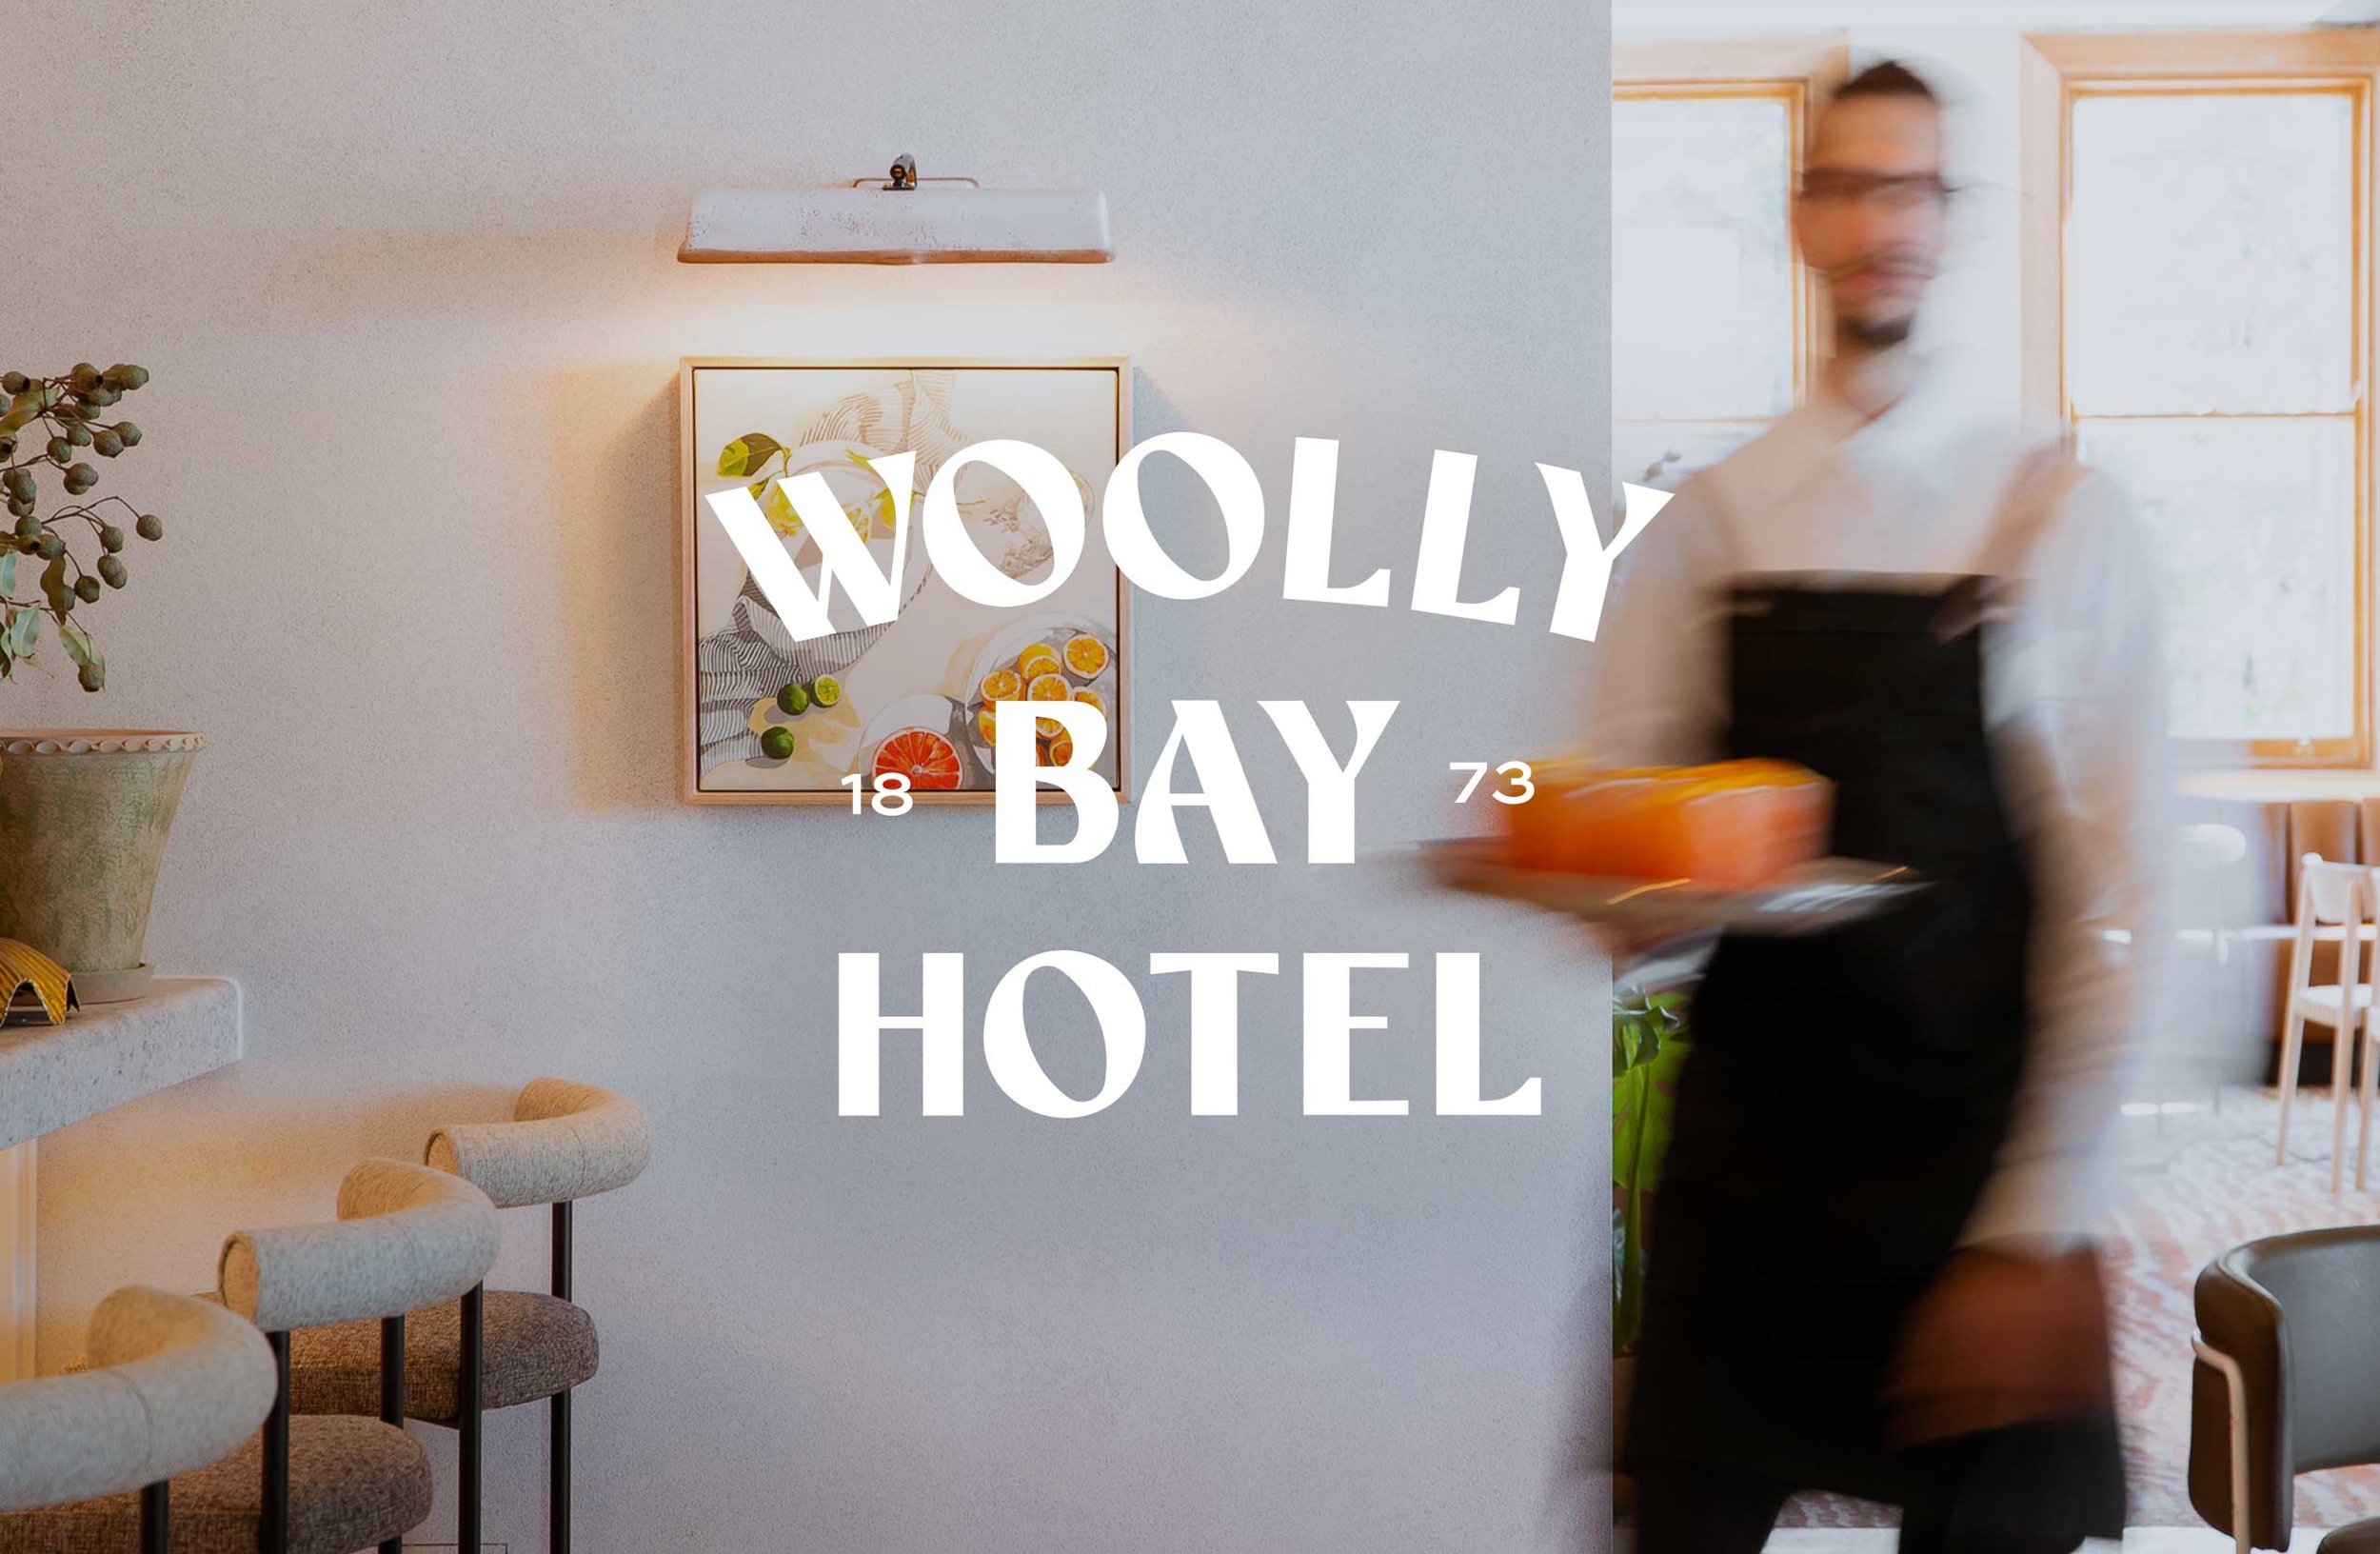 Made_by_mustard_design_studio_sydney_byron_bay_australia_brand_identity_wooly_bay_hotel.jpg